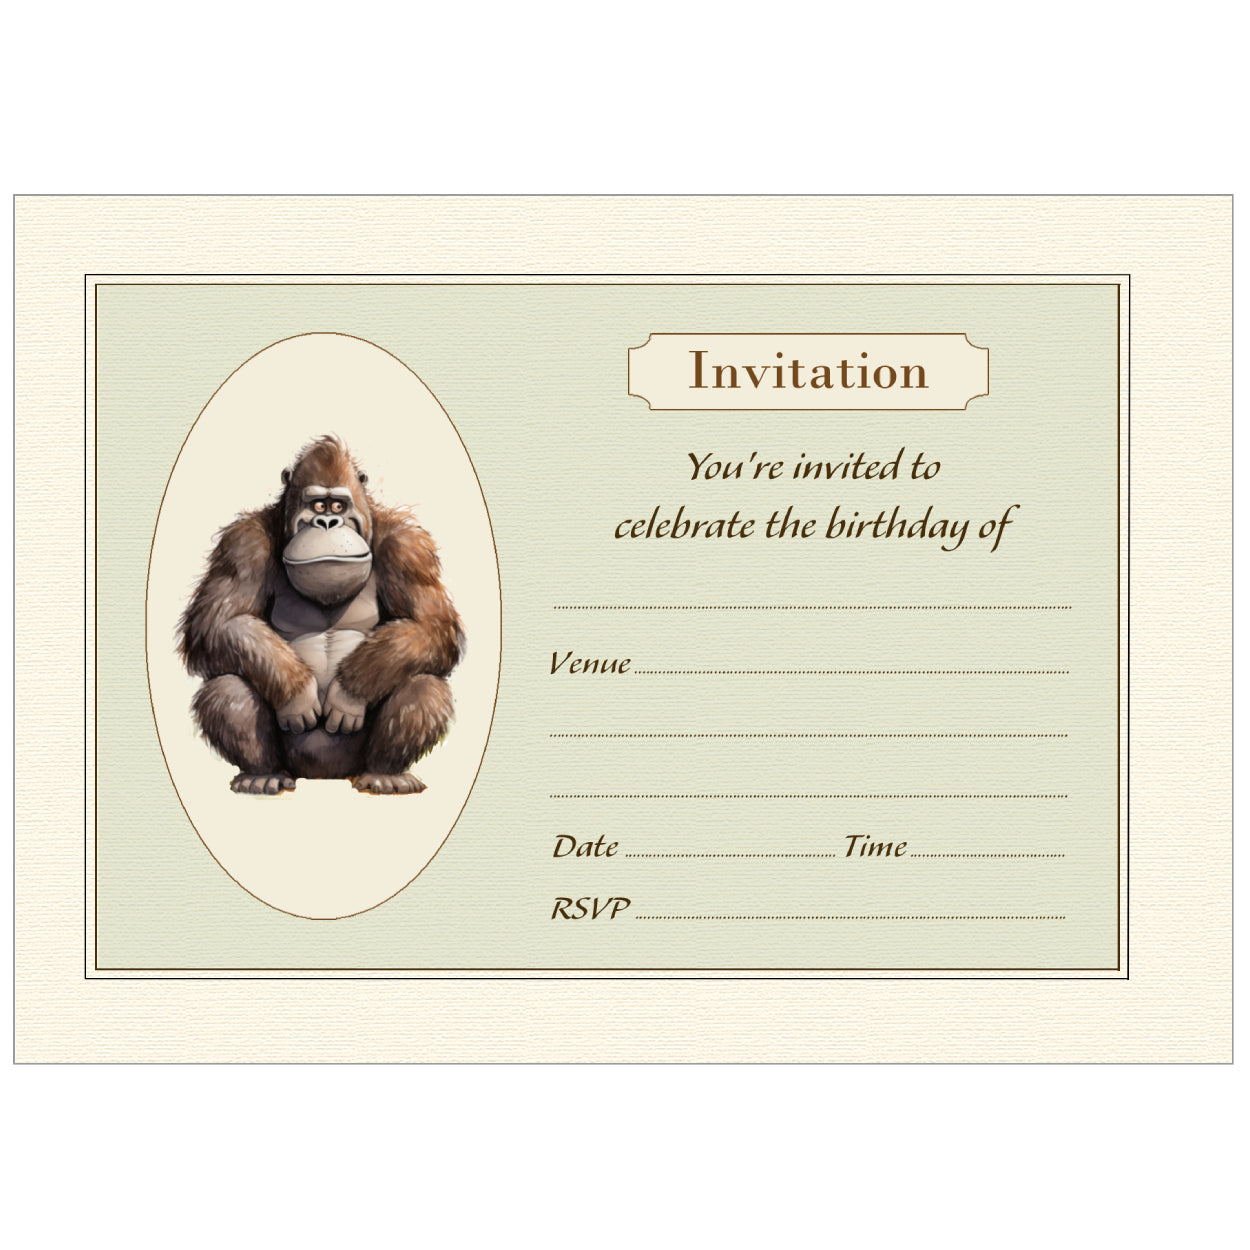 Funny Monkey Birthday Party Invitations - Pack of 10